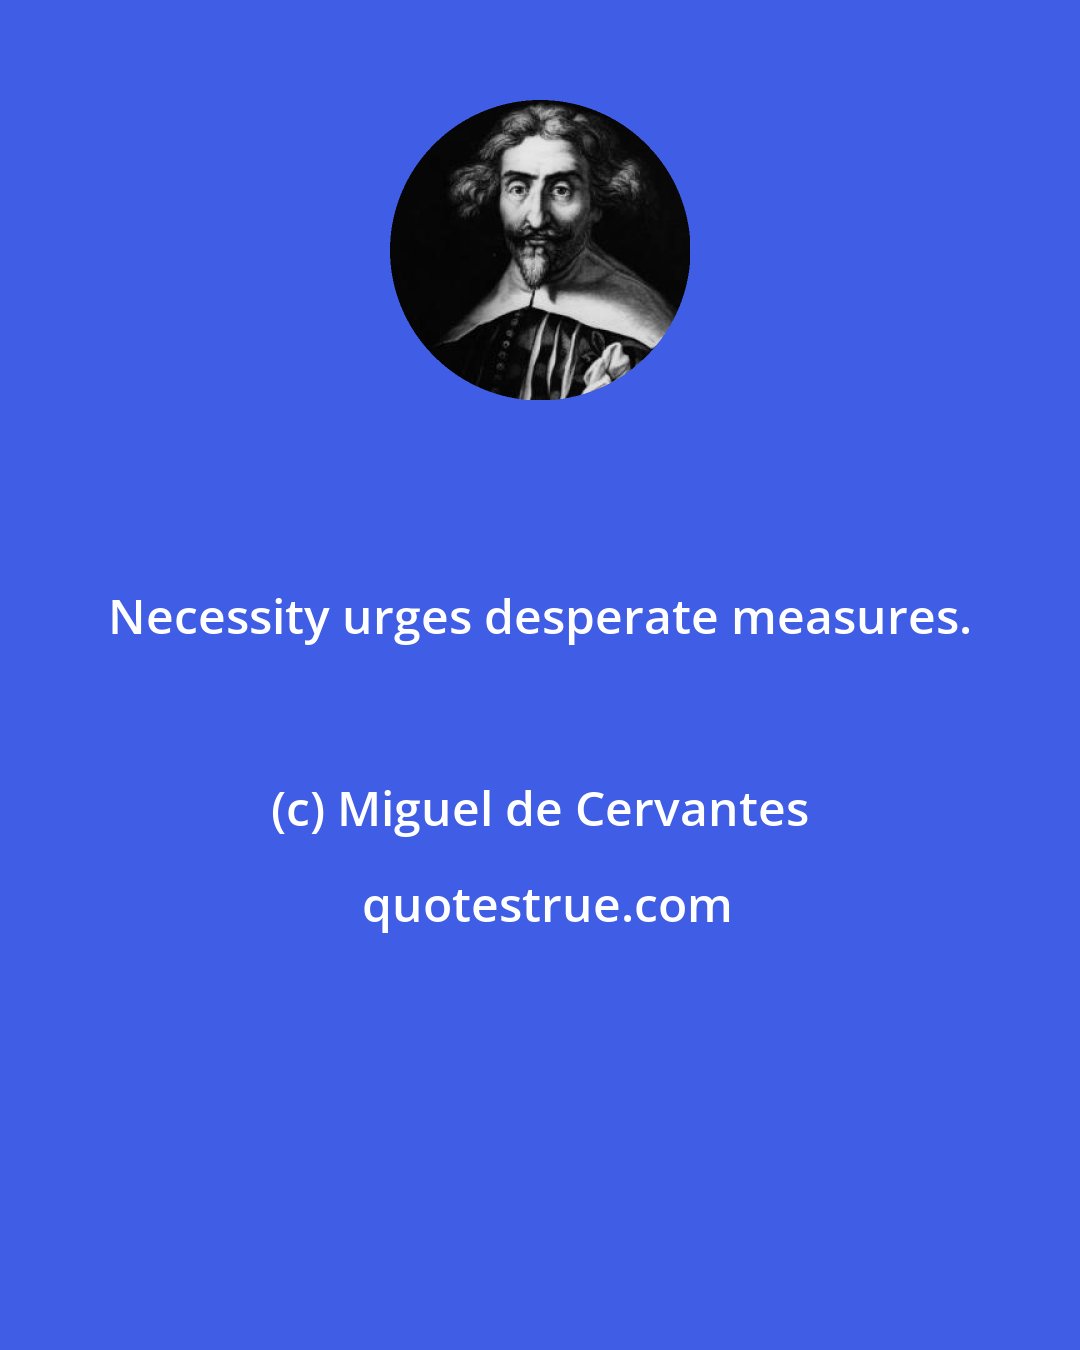 Miguel de Cervantes: Necessity urges desperate measures.